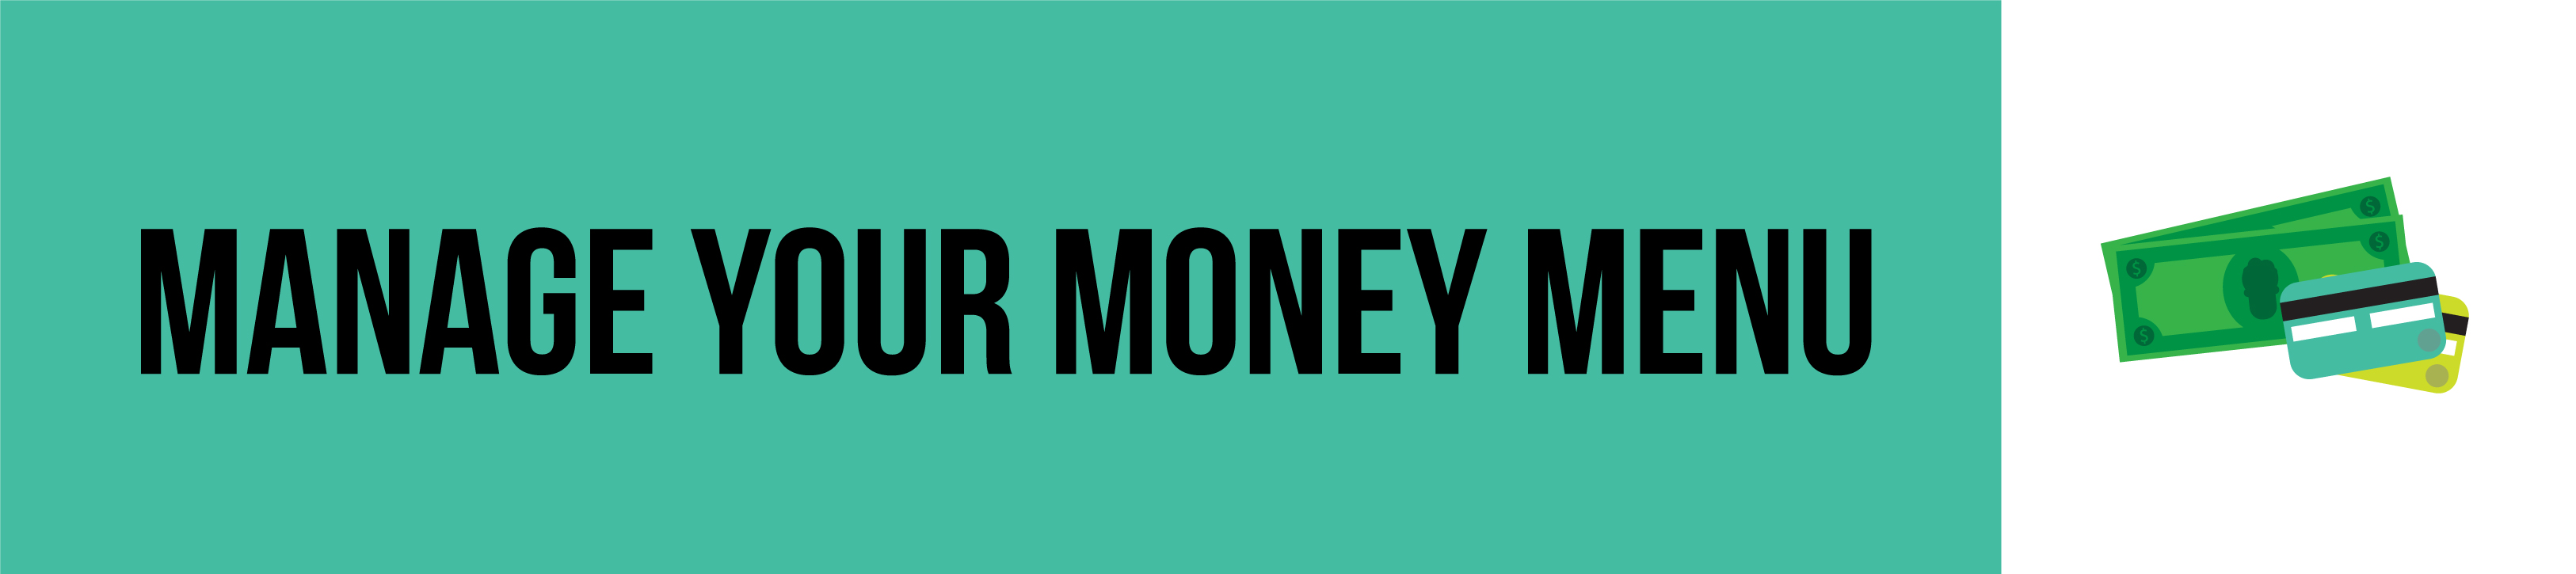 manage your money menu